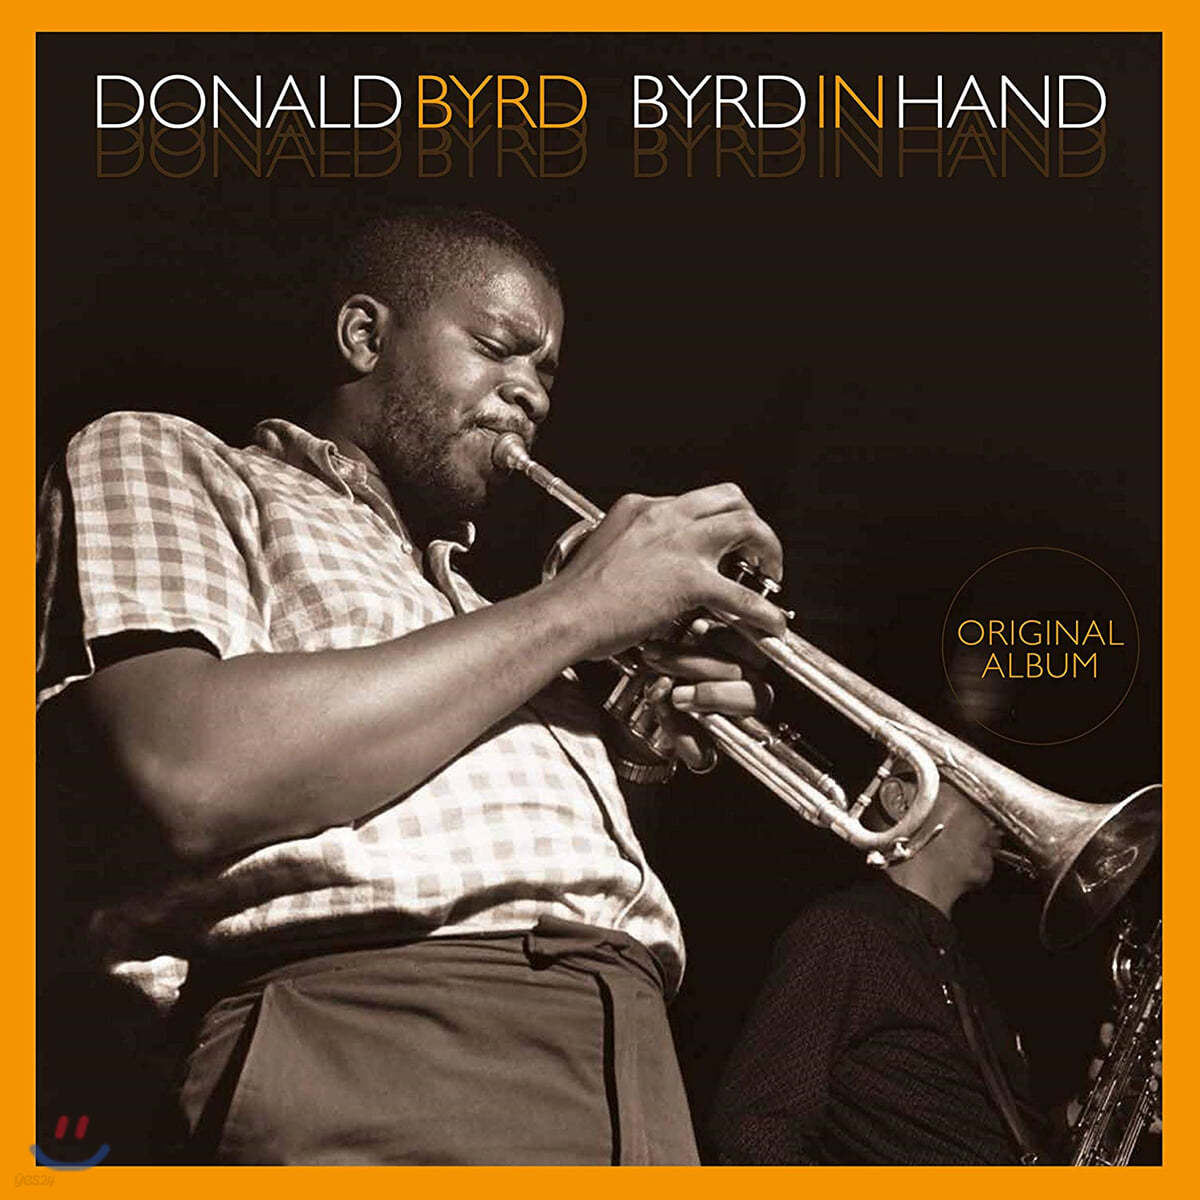 Donald Byrd (도날드 버드) - Byrd in Hand [LP]